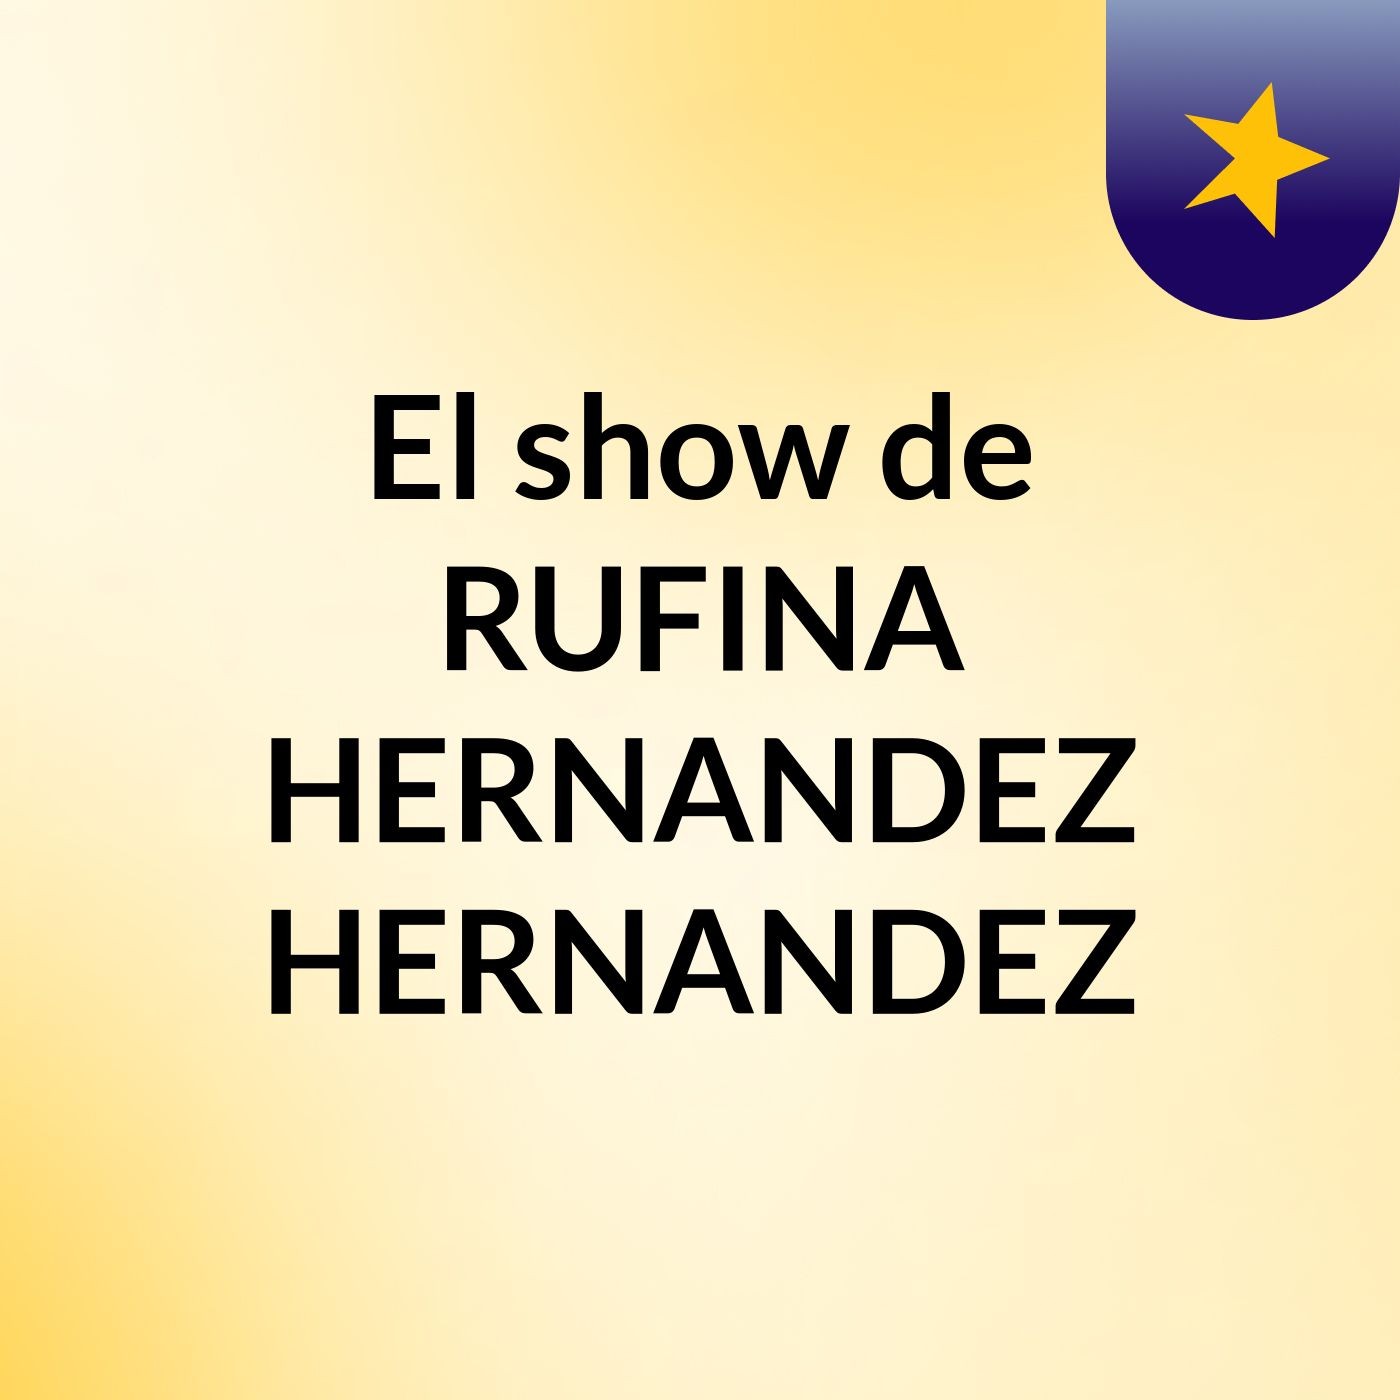 El show de RUFINA HERNANDEZ HERNANDEZ